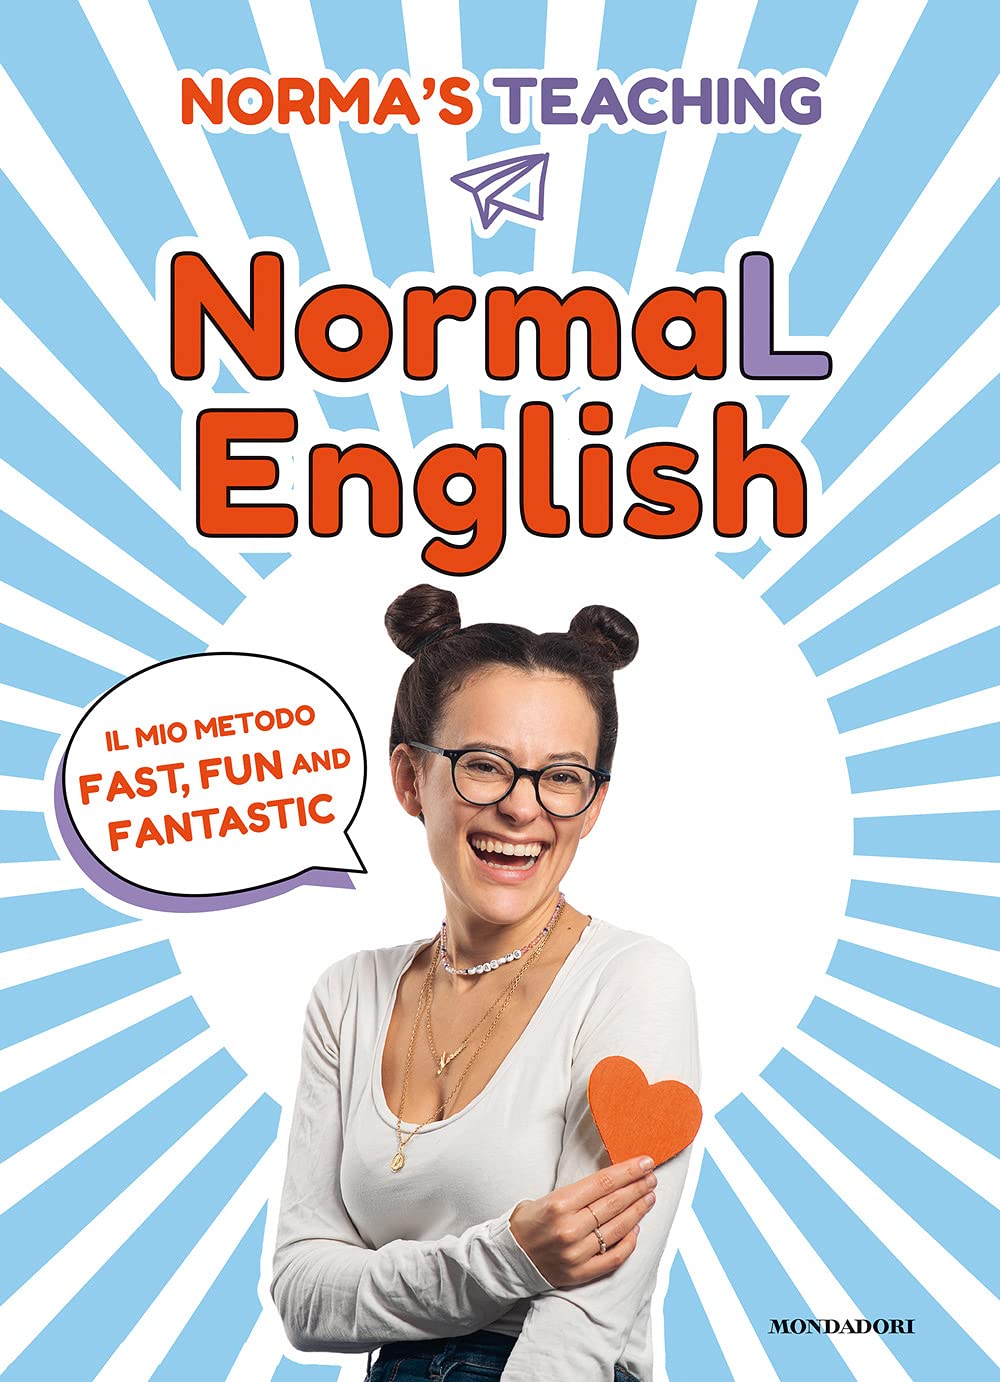 Norma's Teaching: Libri di inglese efficaci e divertenti